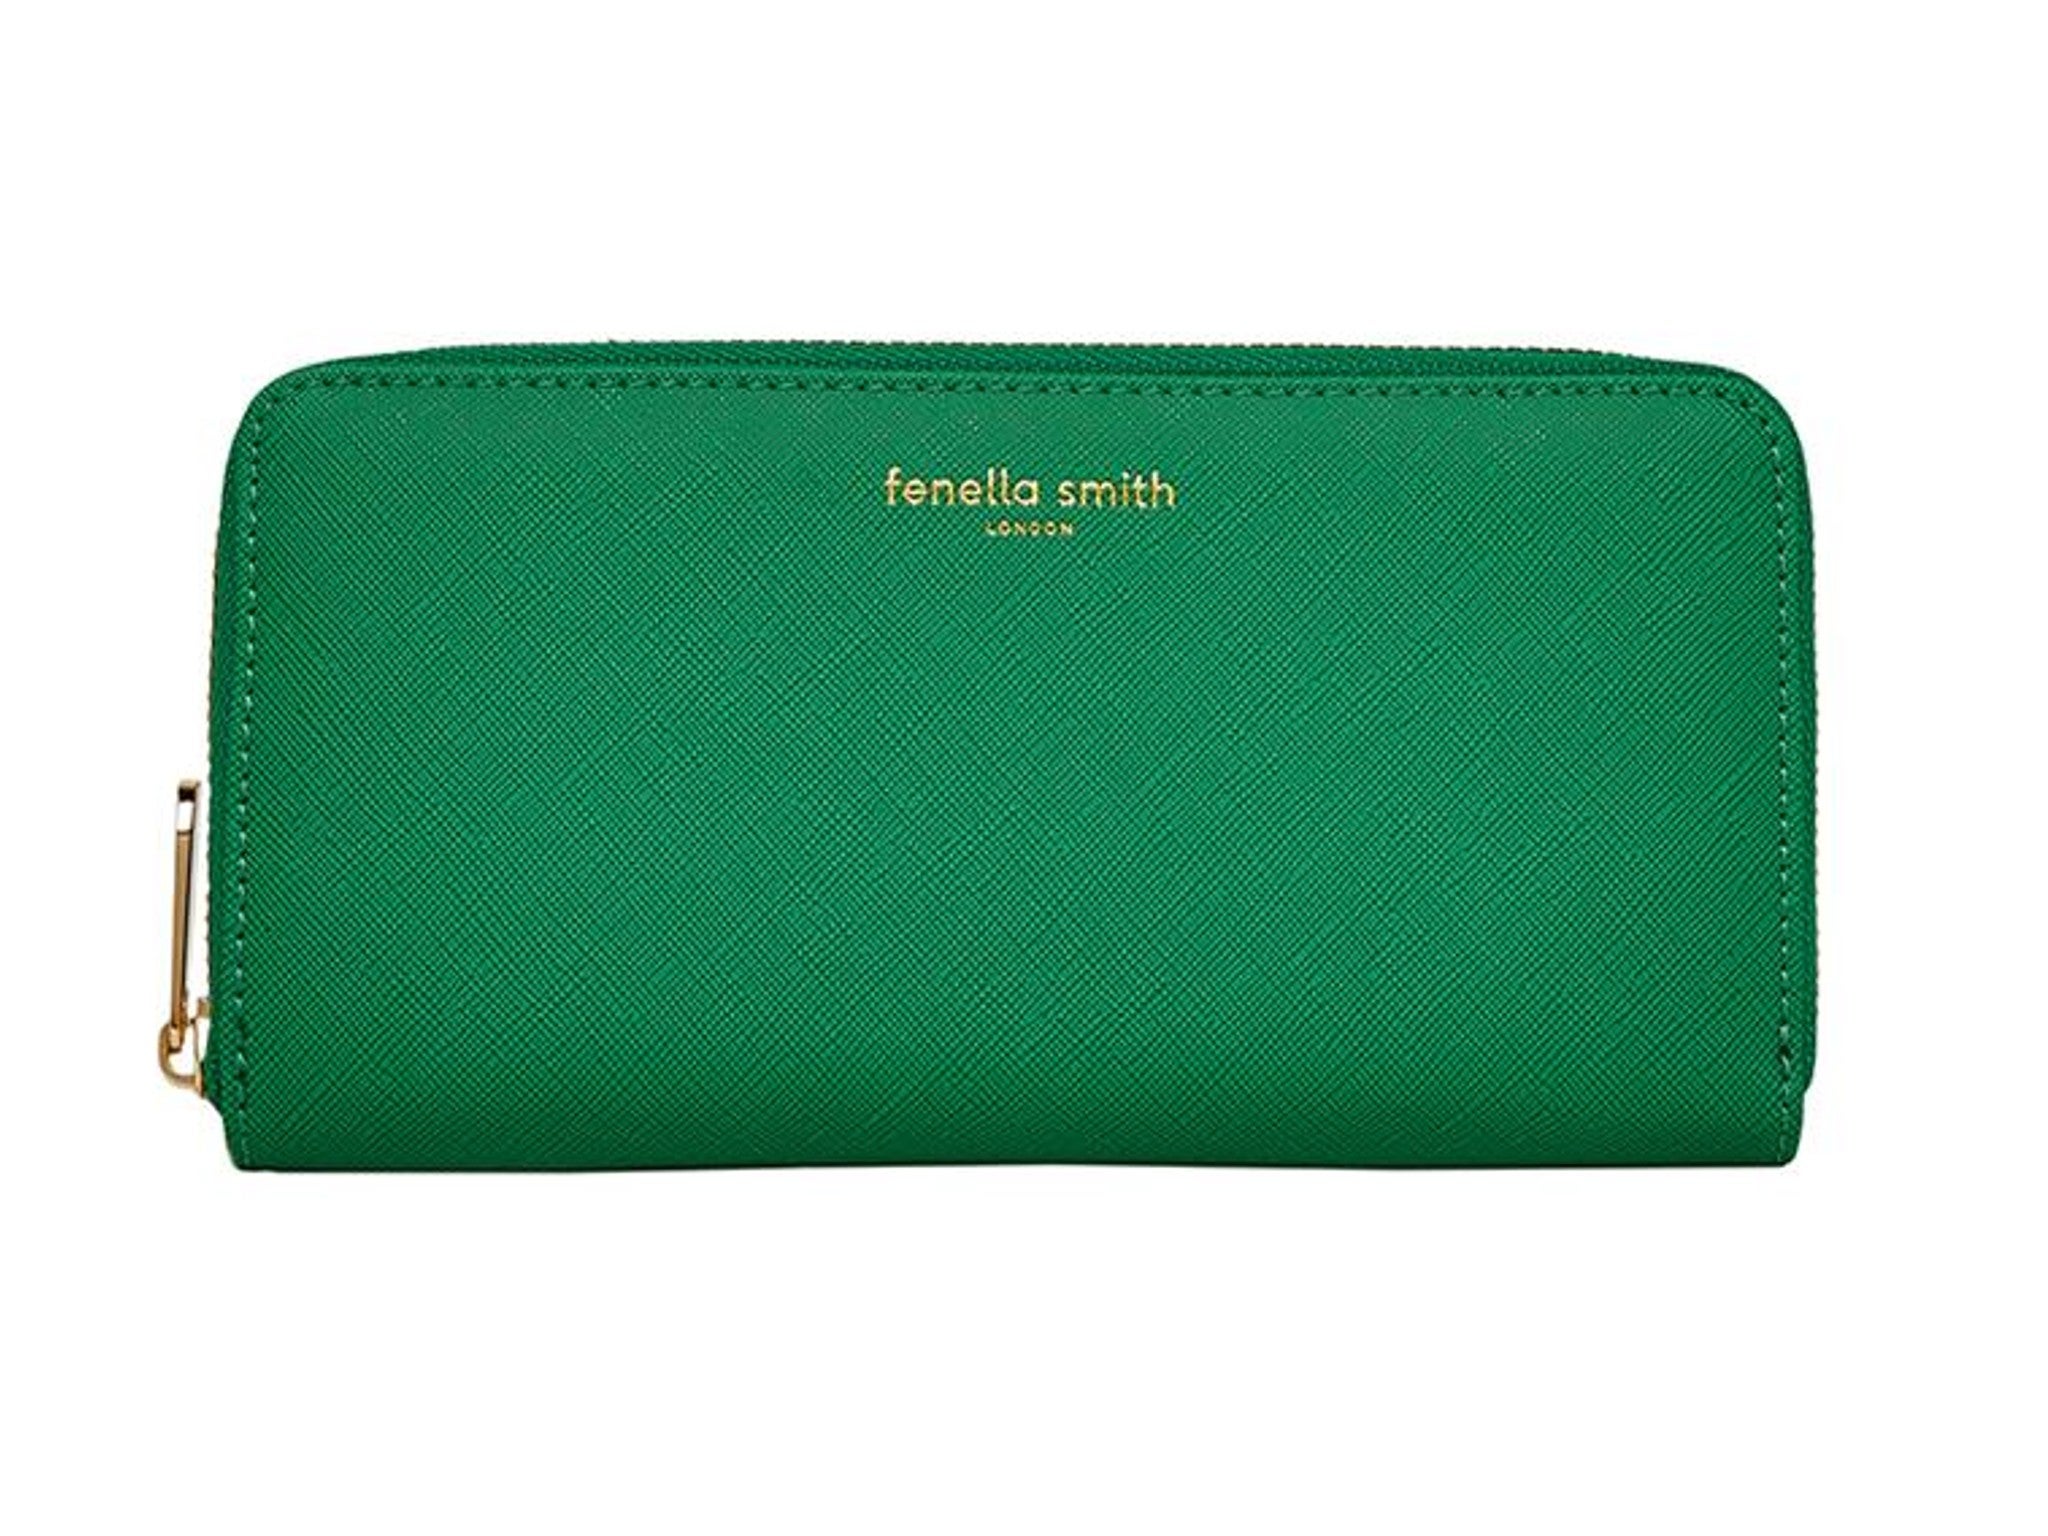 Fenella Smith green aria purse indybest.jpeg